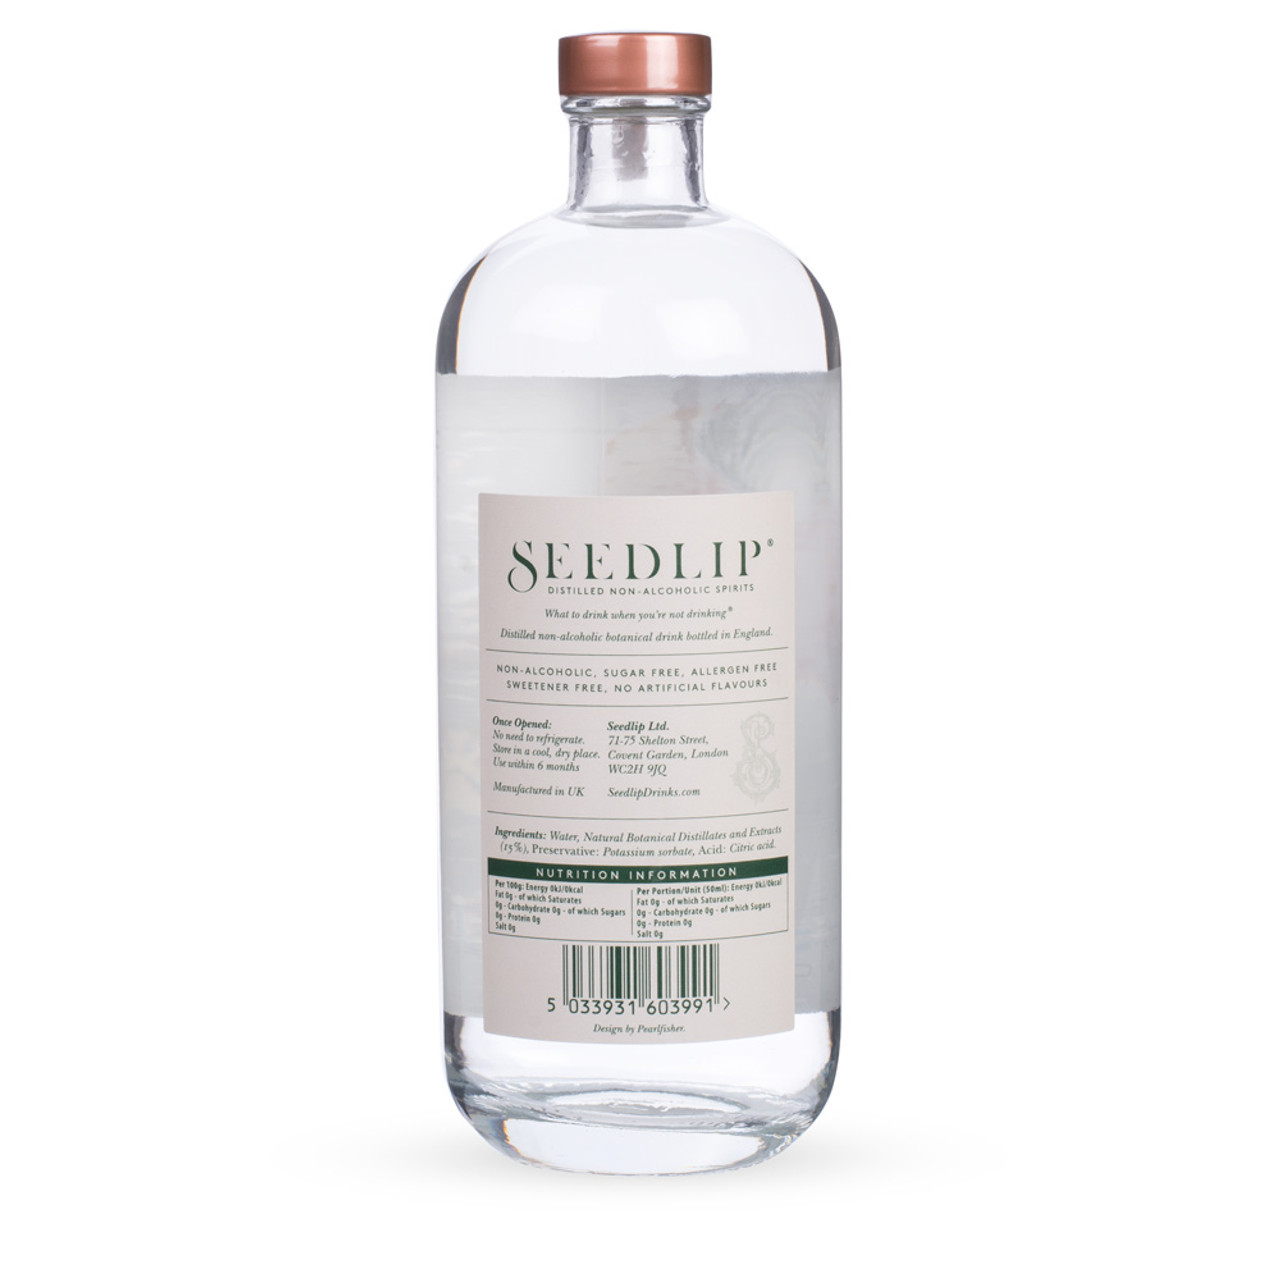 Citrus Seedlip Distilled 42 Spirits - Non-Alcoholic 700ml Grove